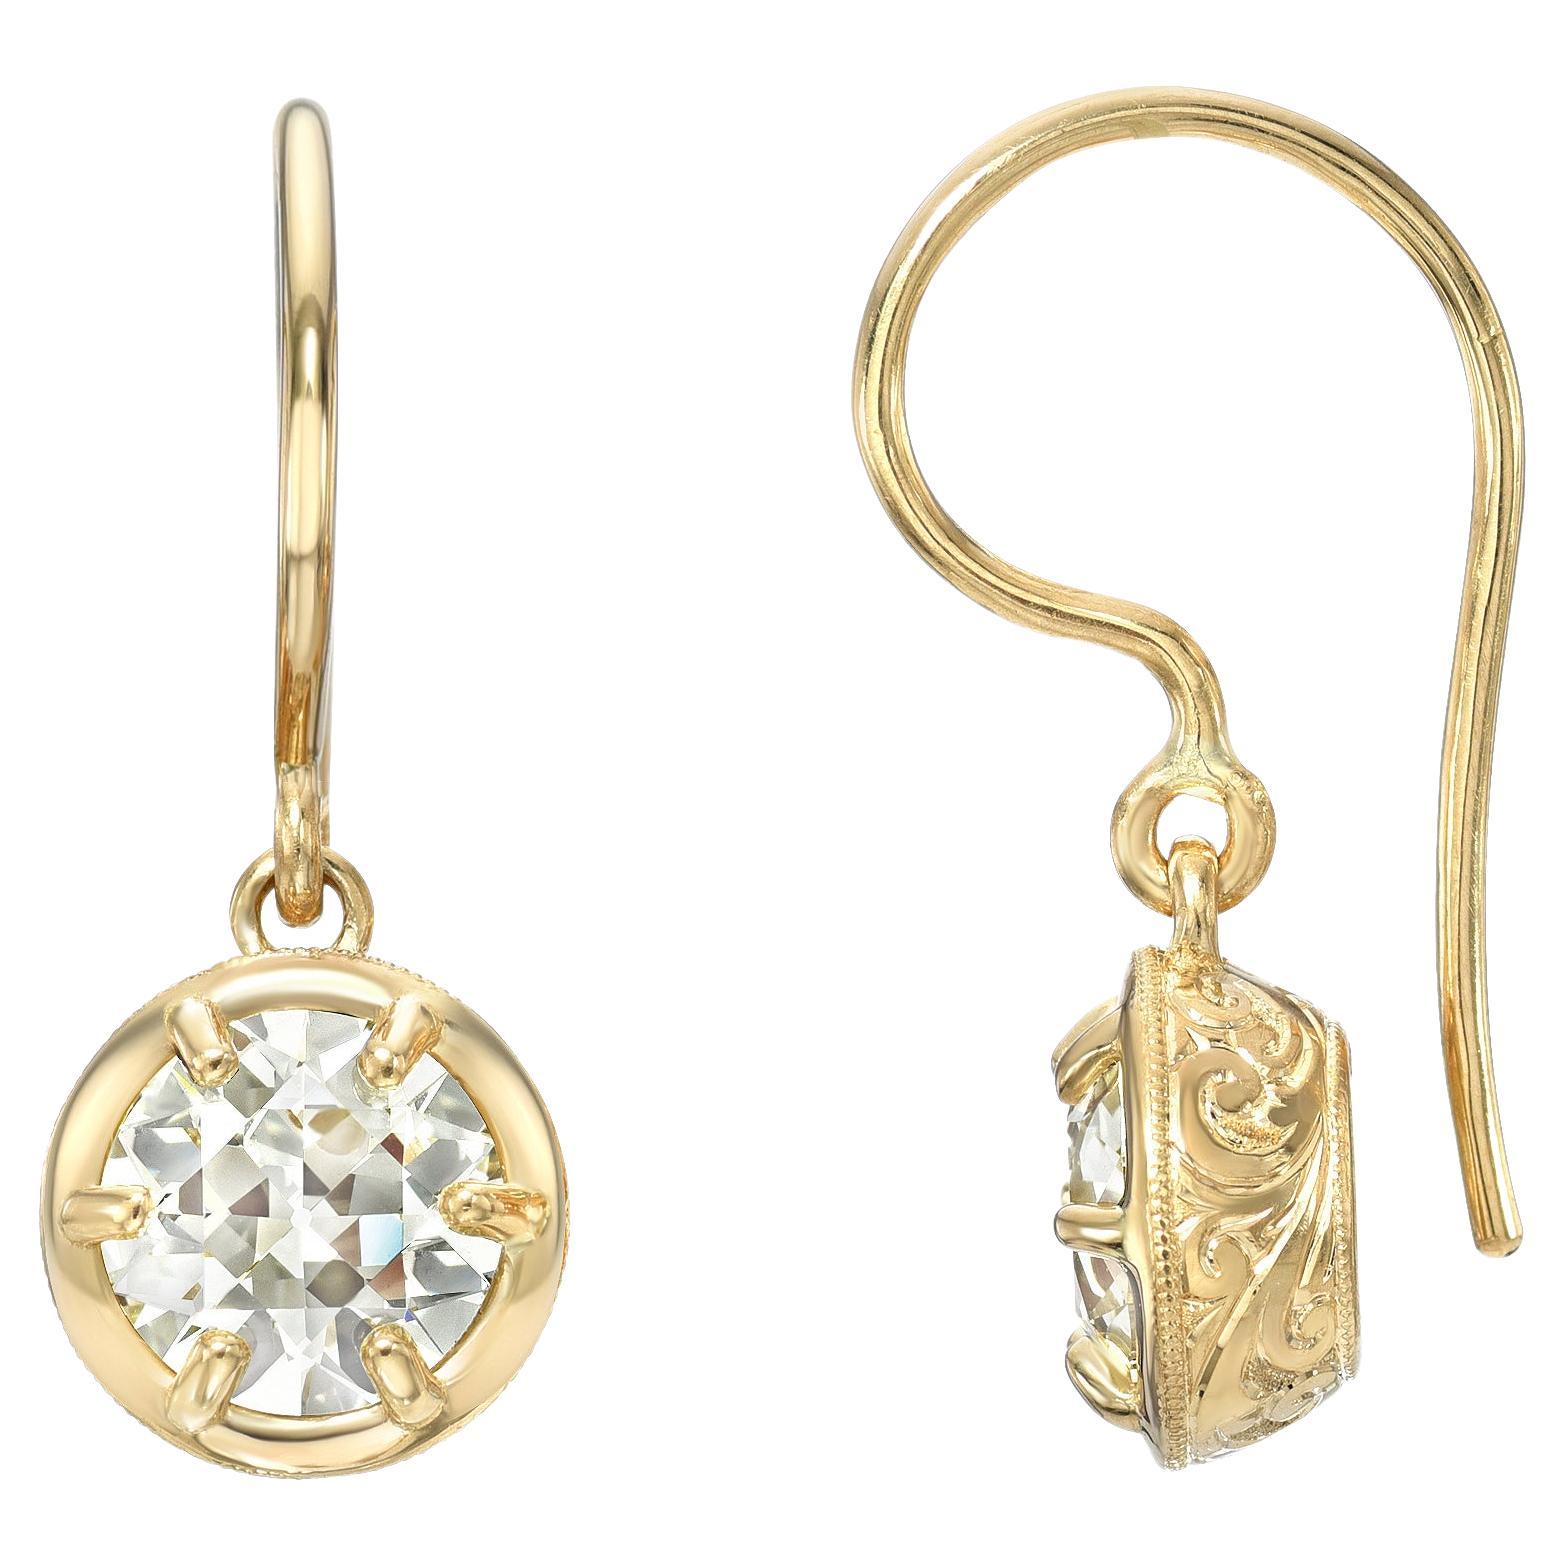 Handcrafted Samara Old European Cut Diamond Drop Earrings by Single Stone